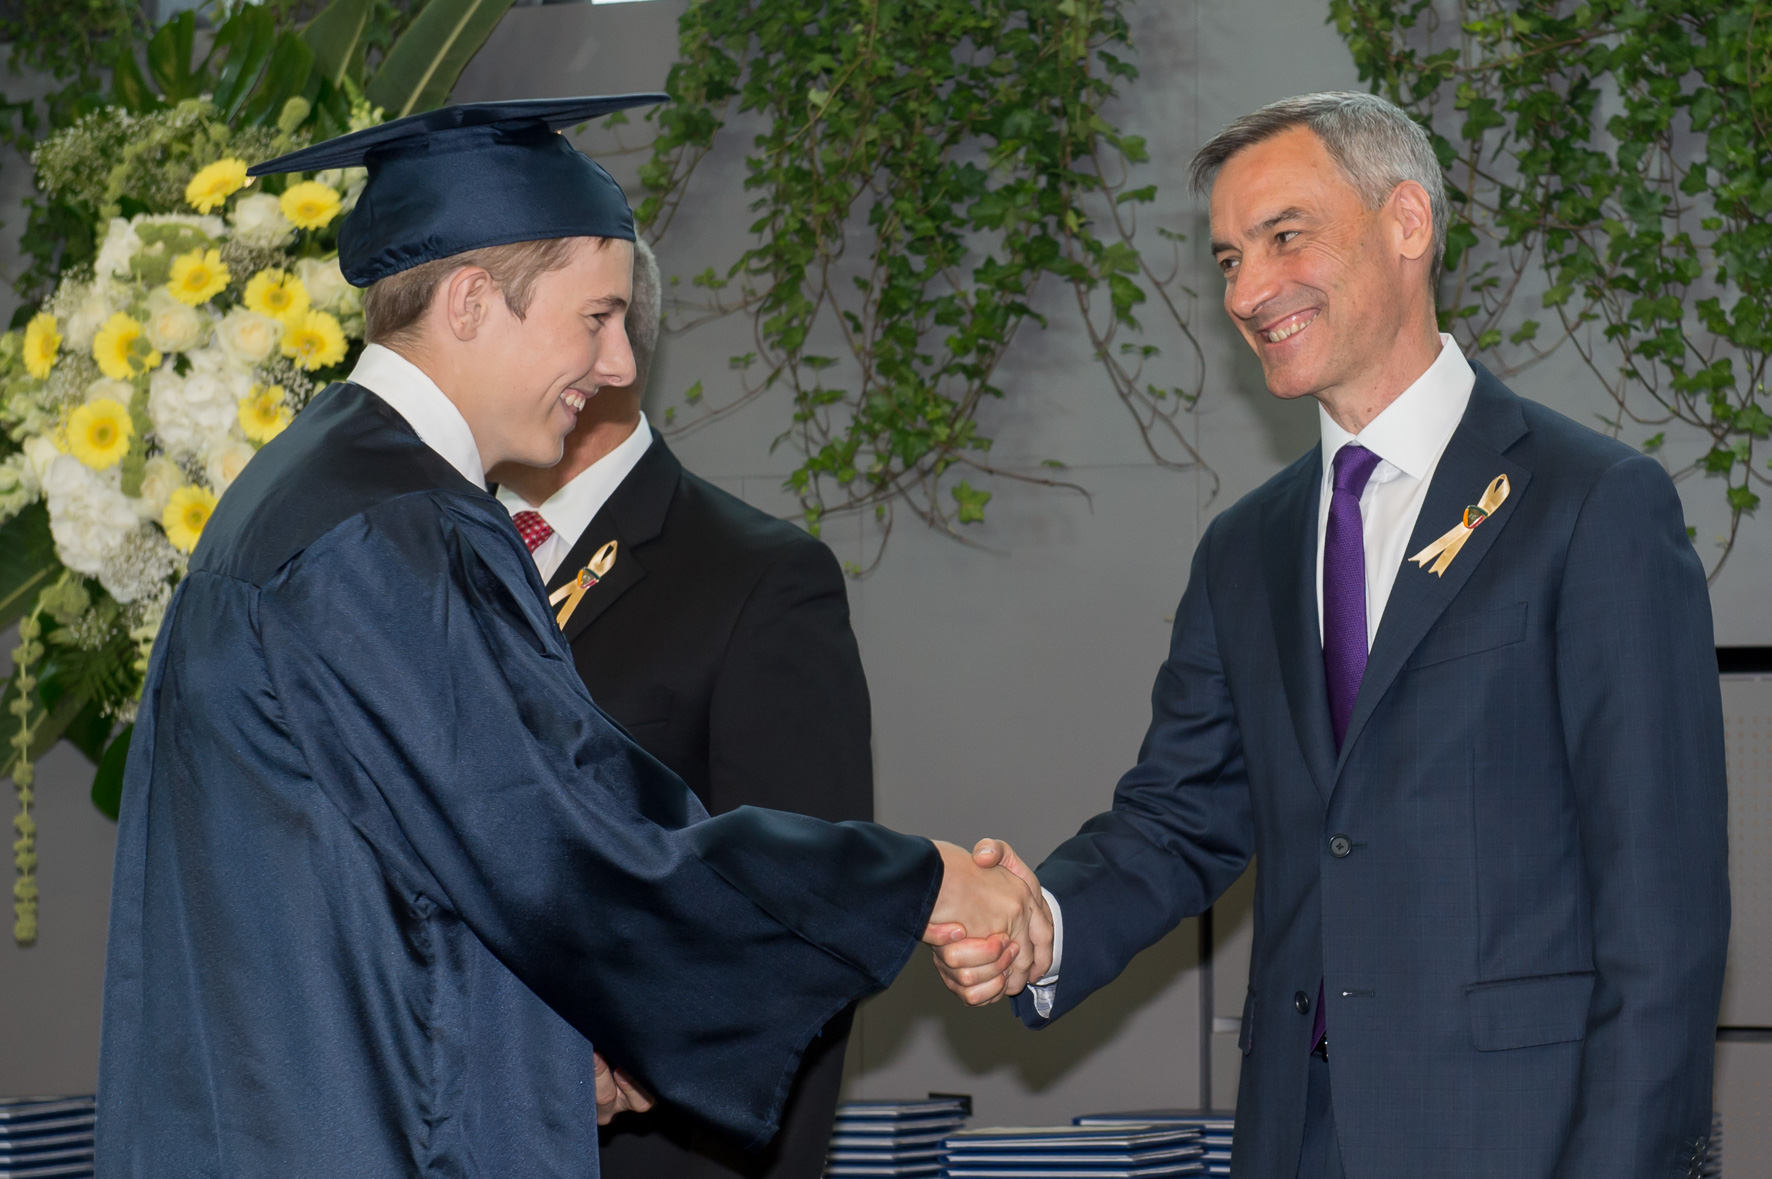 Kevin Lane shakes graduate's hand